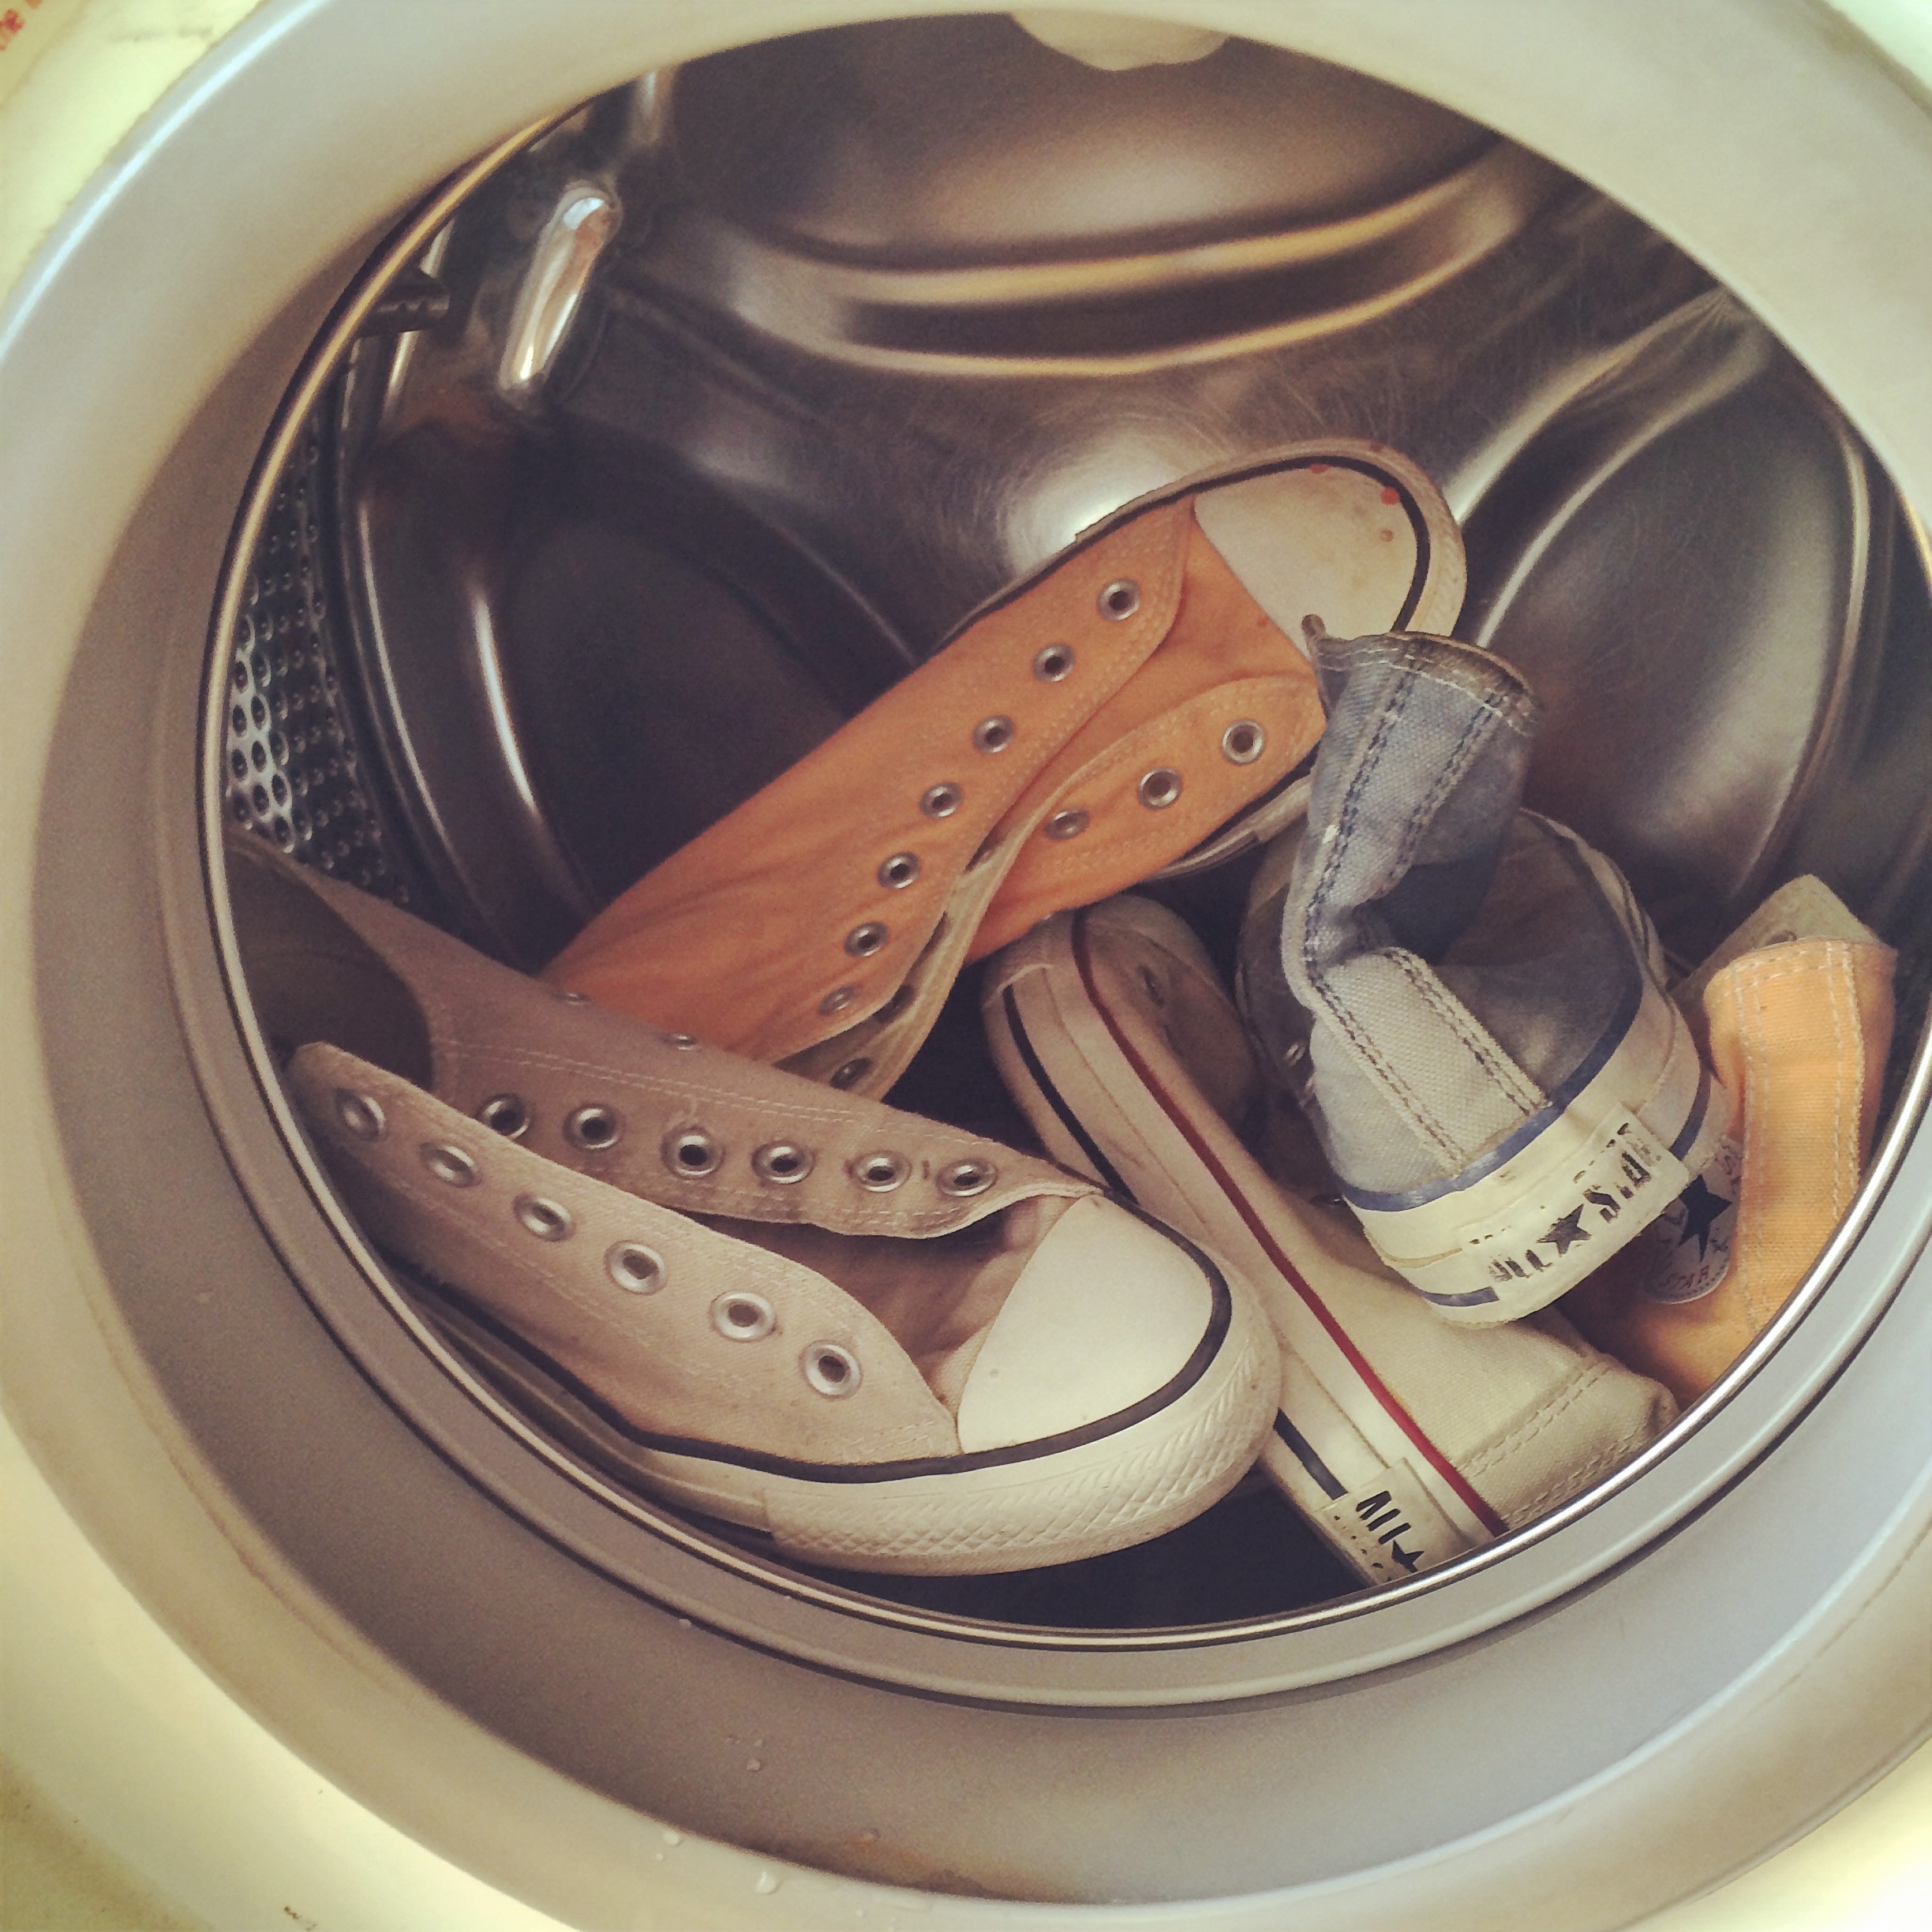 converse in washing machine